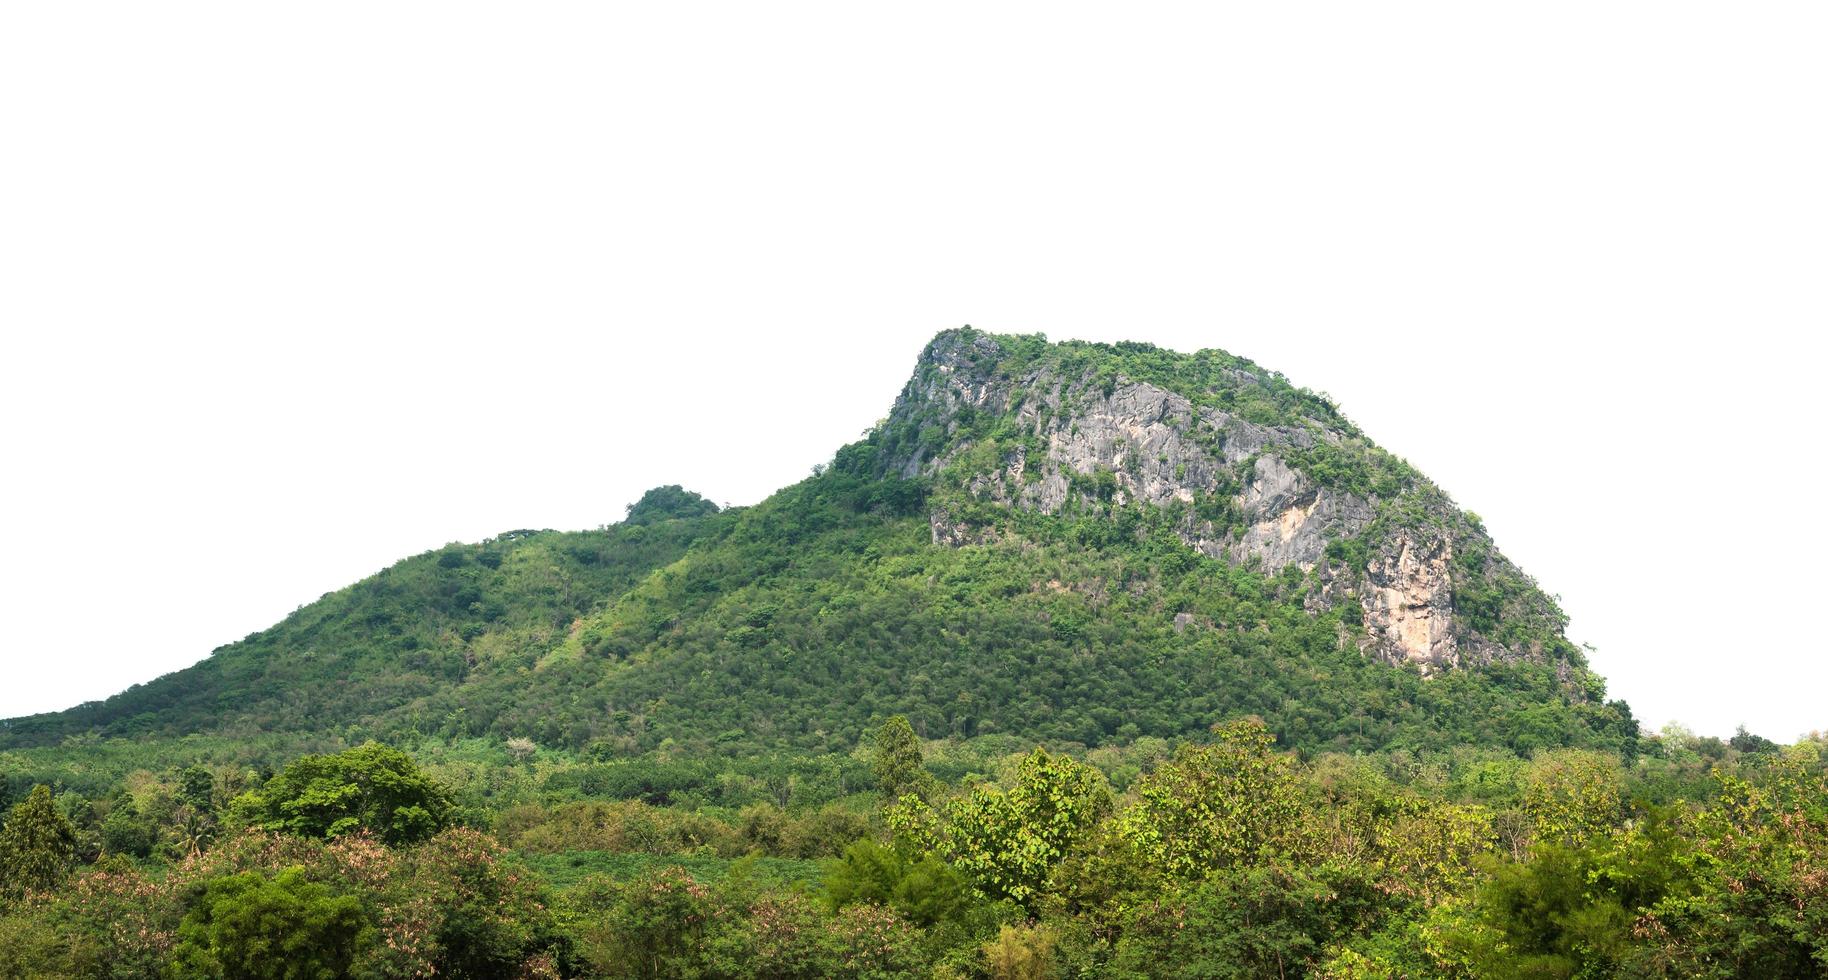 rock berg kulle med grön skog isolera på vit bakgrund foto